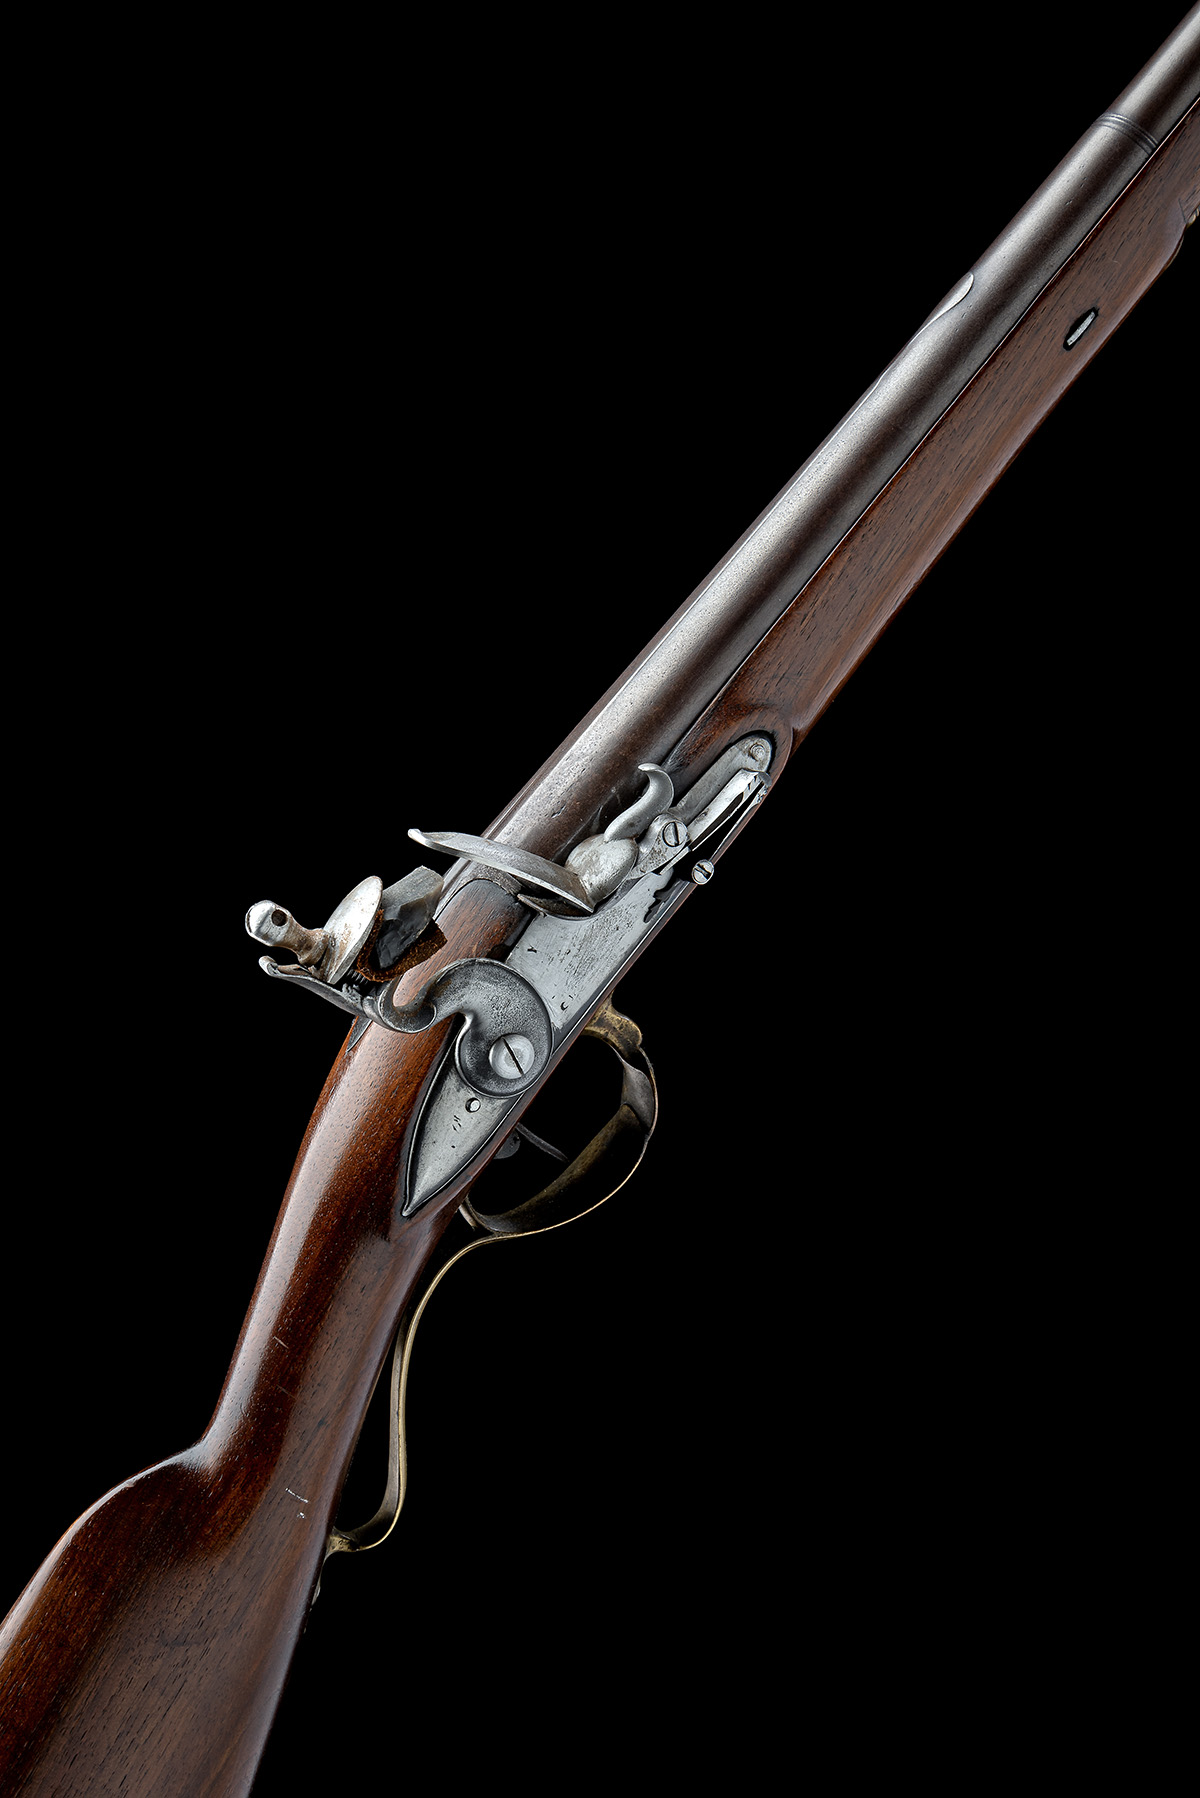 A 14-BORE FULL-STOCKED FLINTLOCK SPORTING GUN, SIGNATURE ERASED, CIRCA 1760, no visible serial